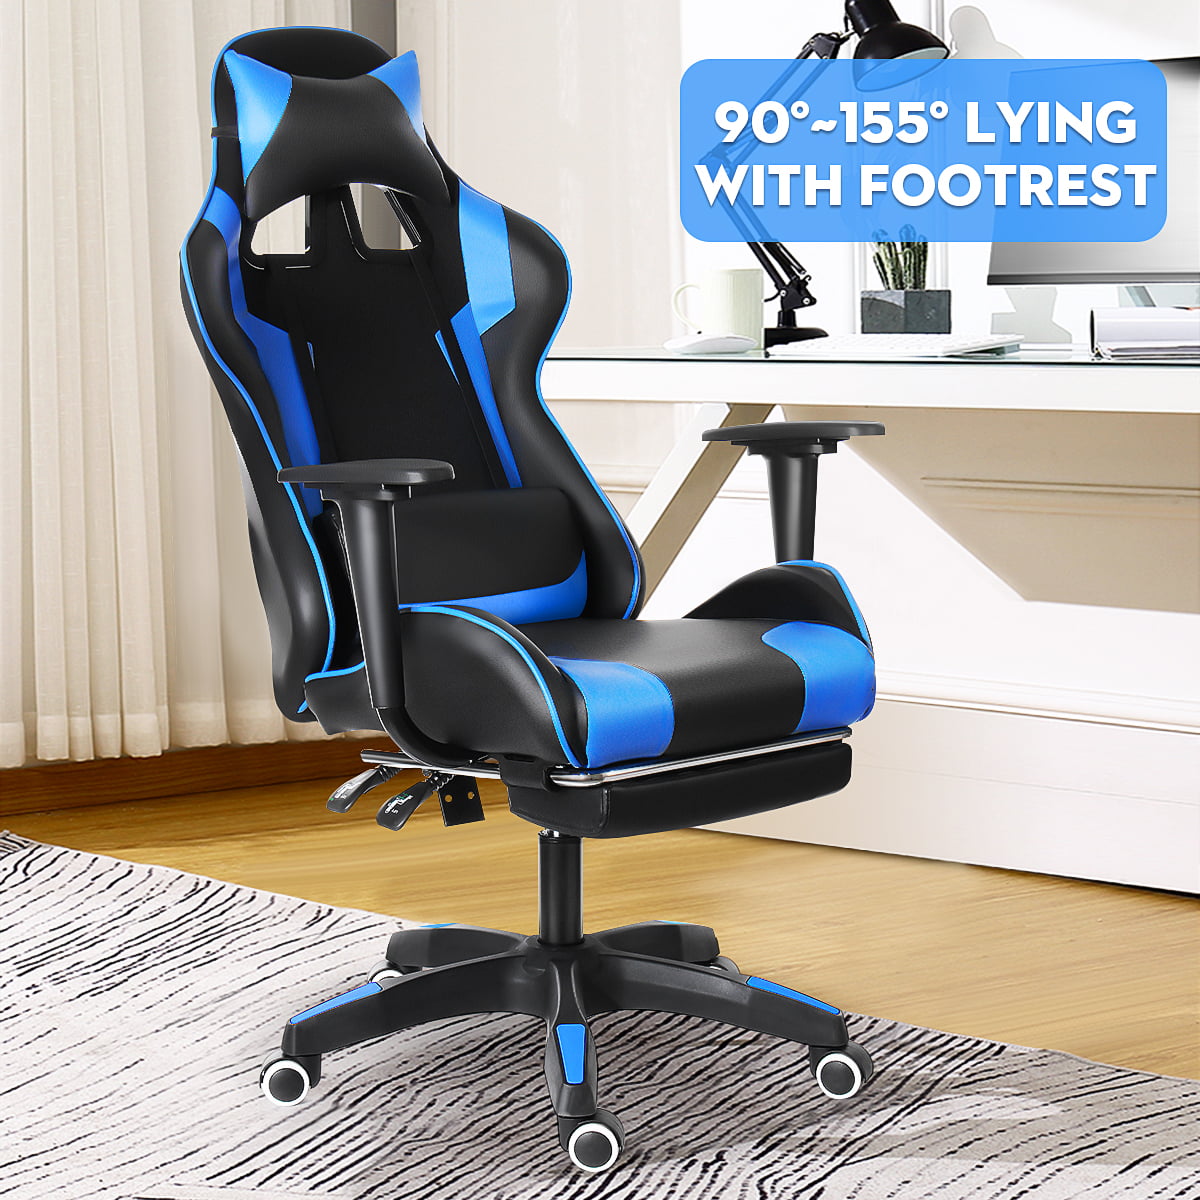 90°155° Lying Gaming Chair Swivel Ergonomic Racing Chair